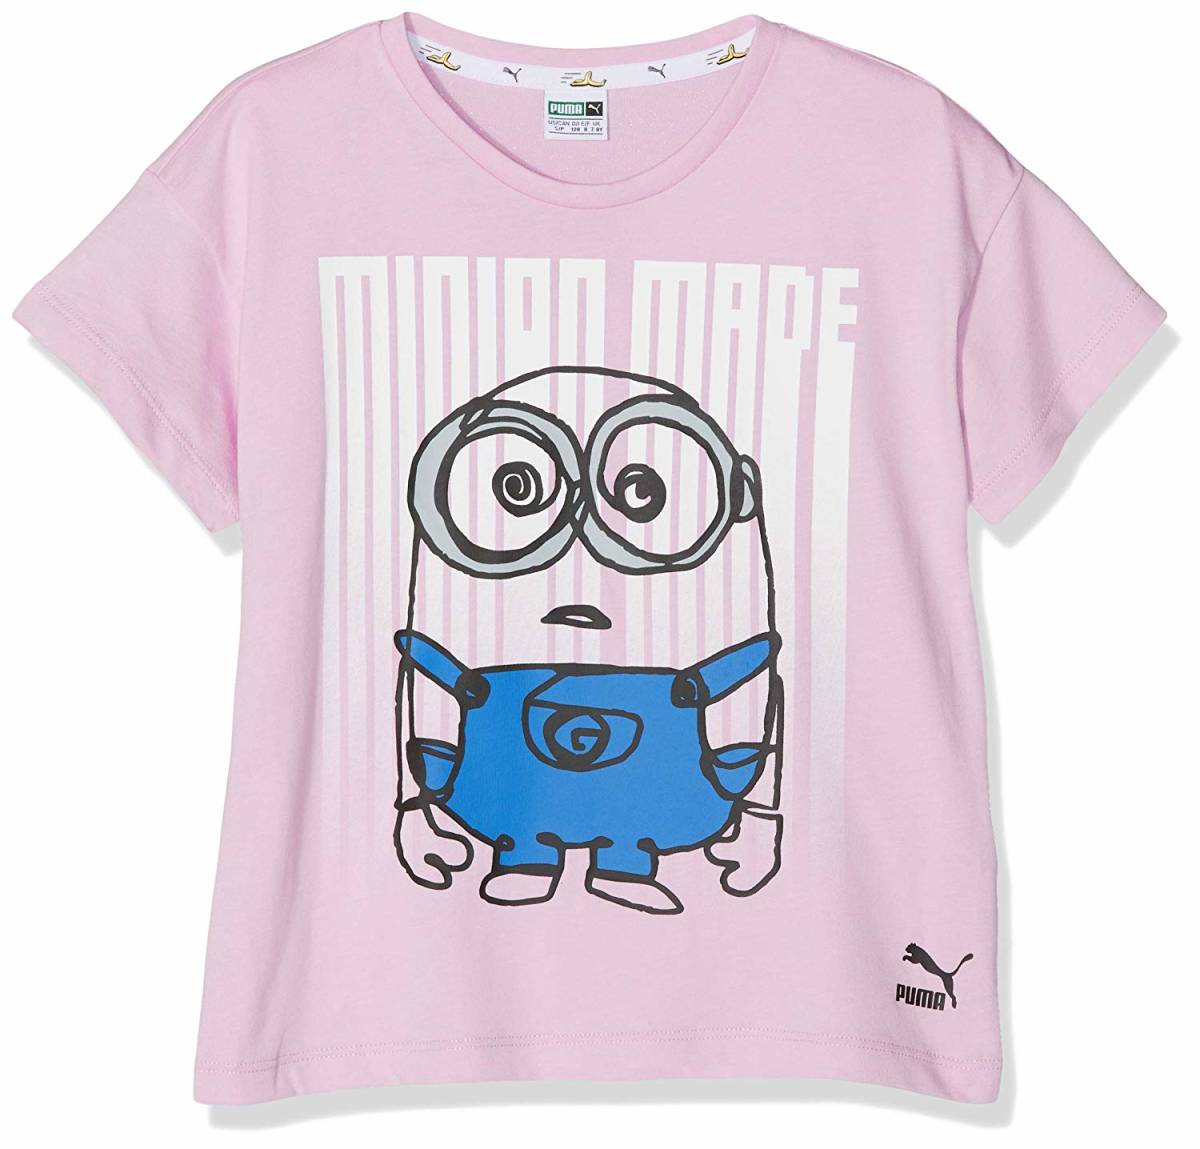  Puma Mini on z сотрудничество Kids короткий рукав футболка 2 шт. комплект 116 белый розовый Minions детский девочка Junior стоимость доставки 370 иен 